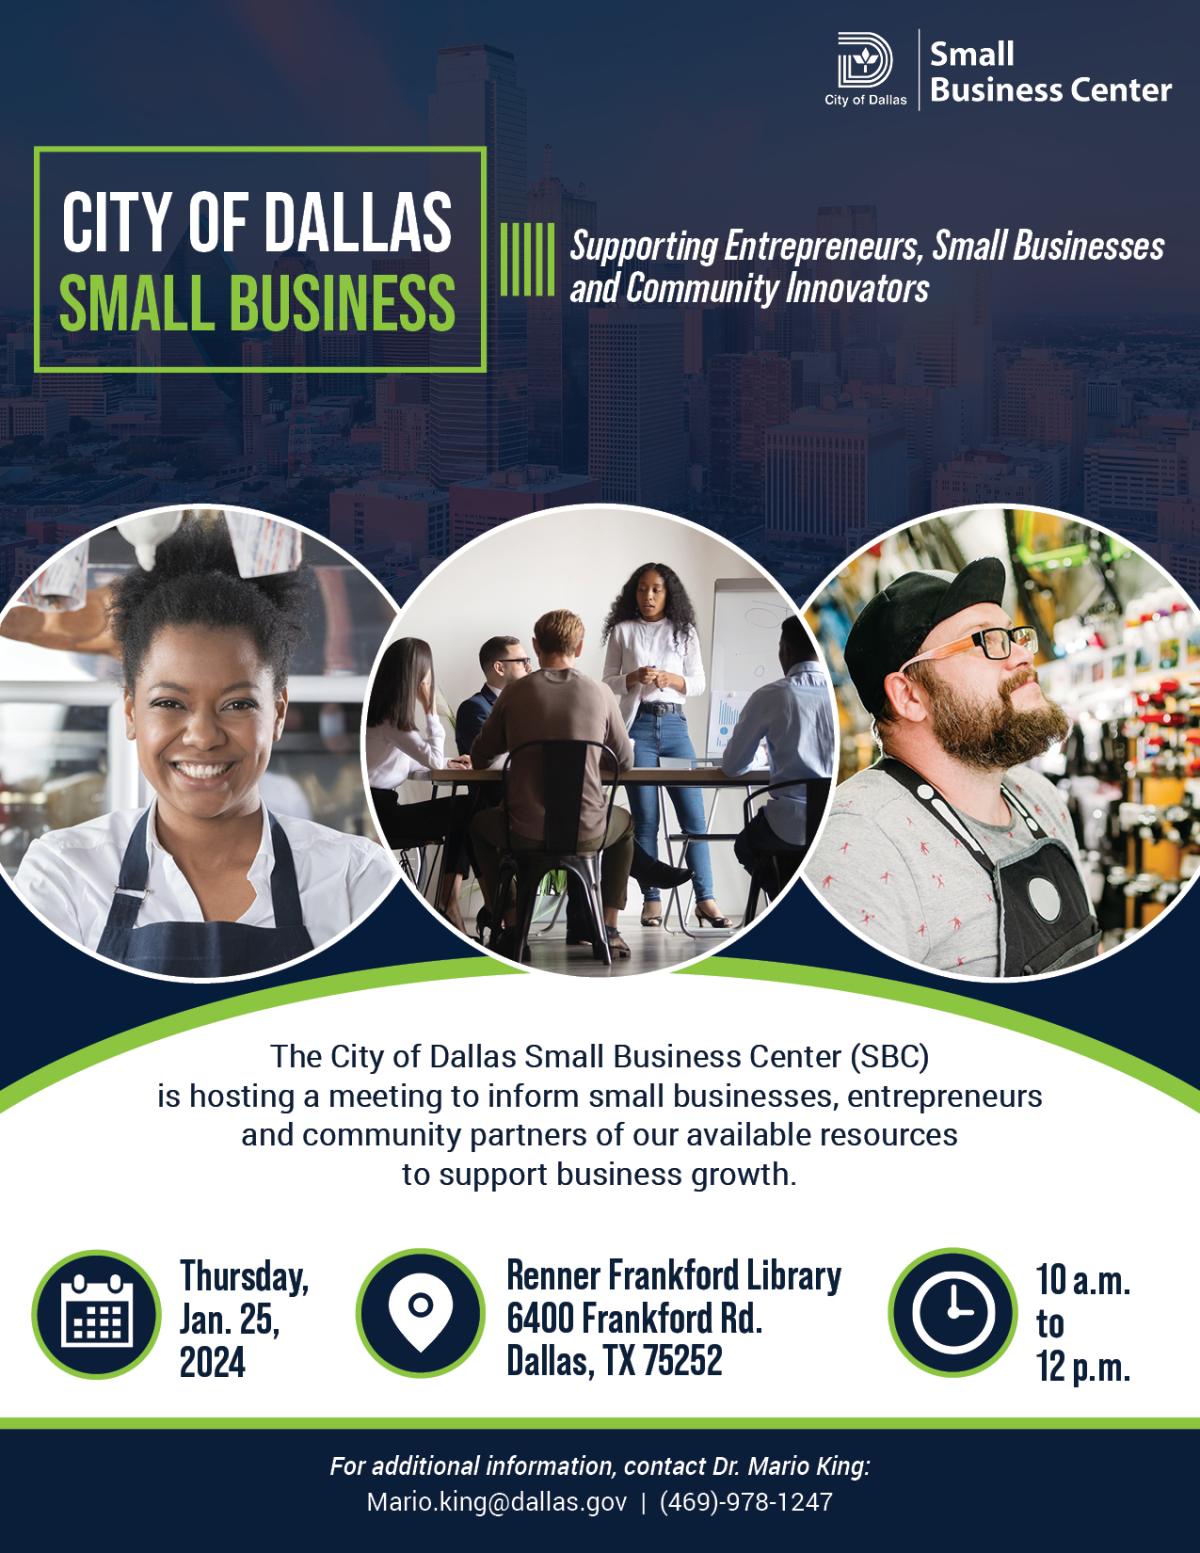 Small Business Center - City of Dallas